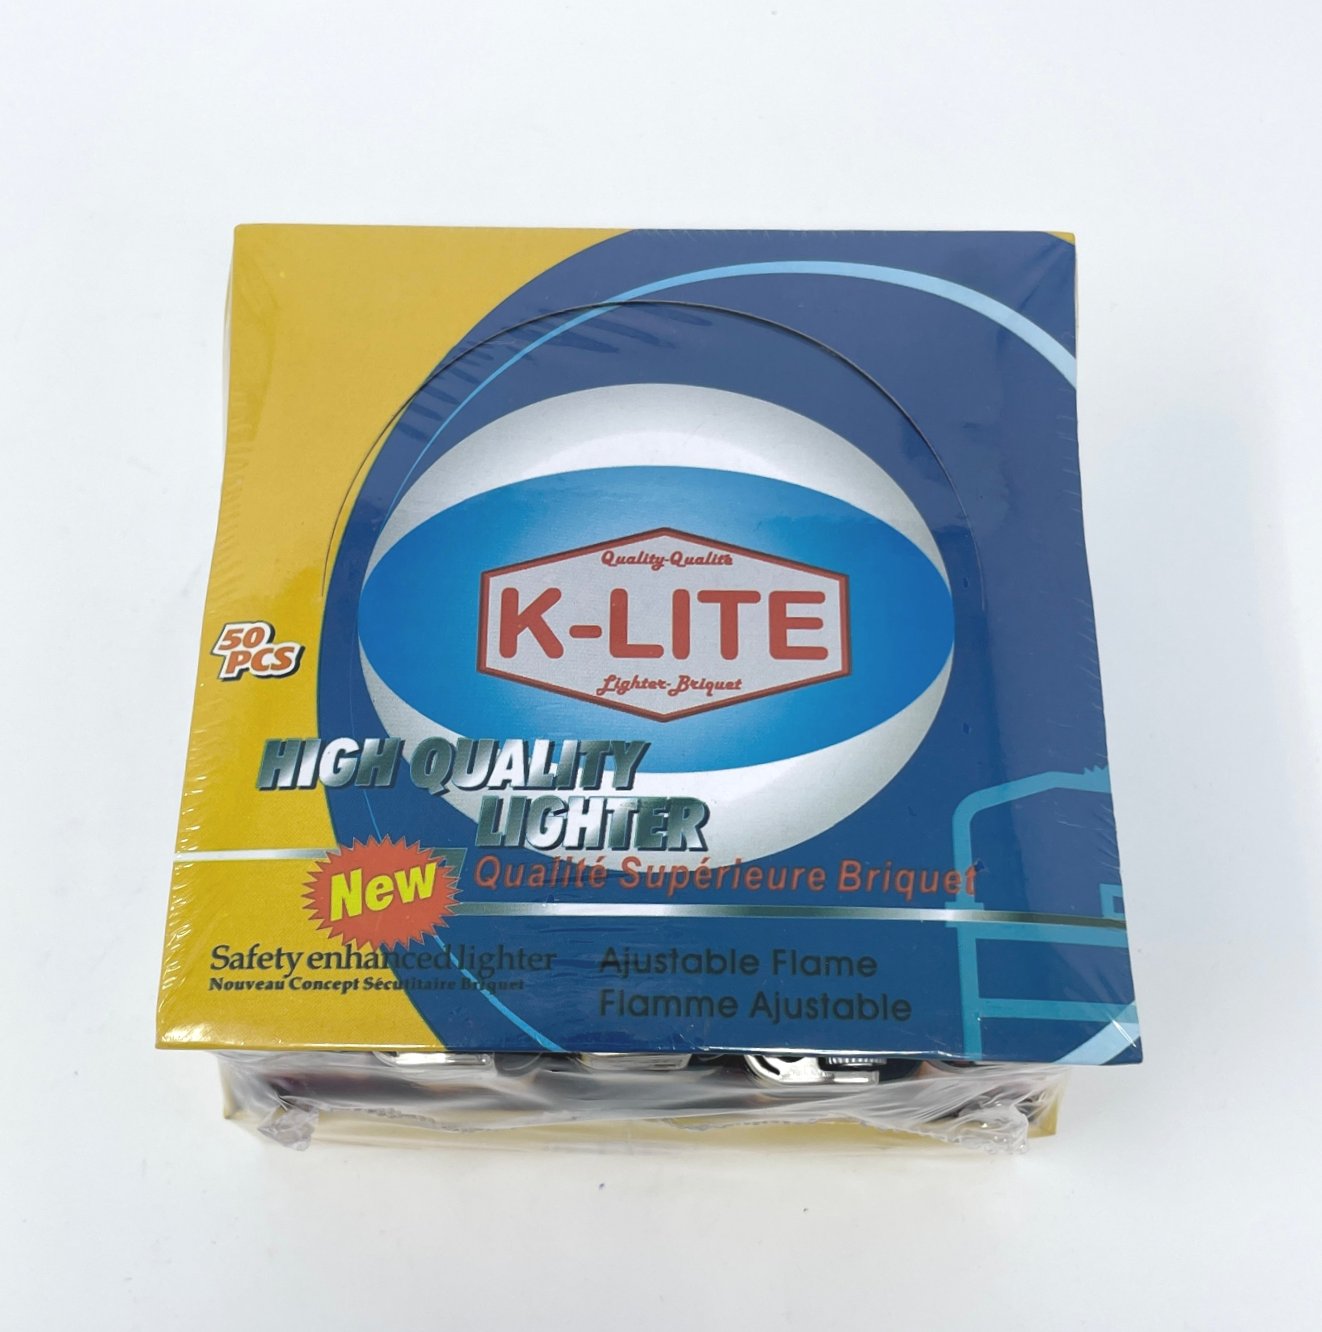 K-lite Lighter (50 units/pack)